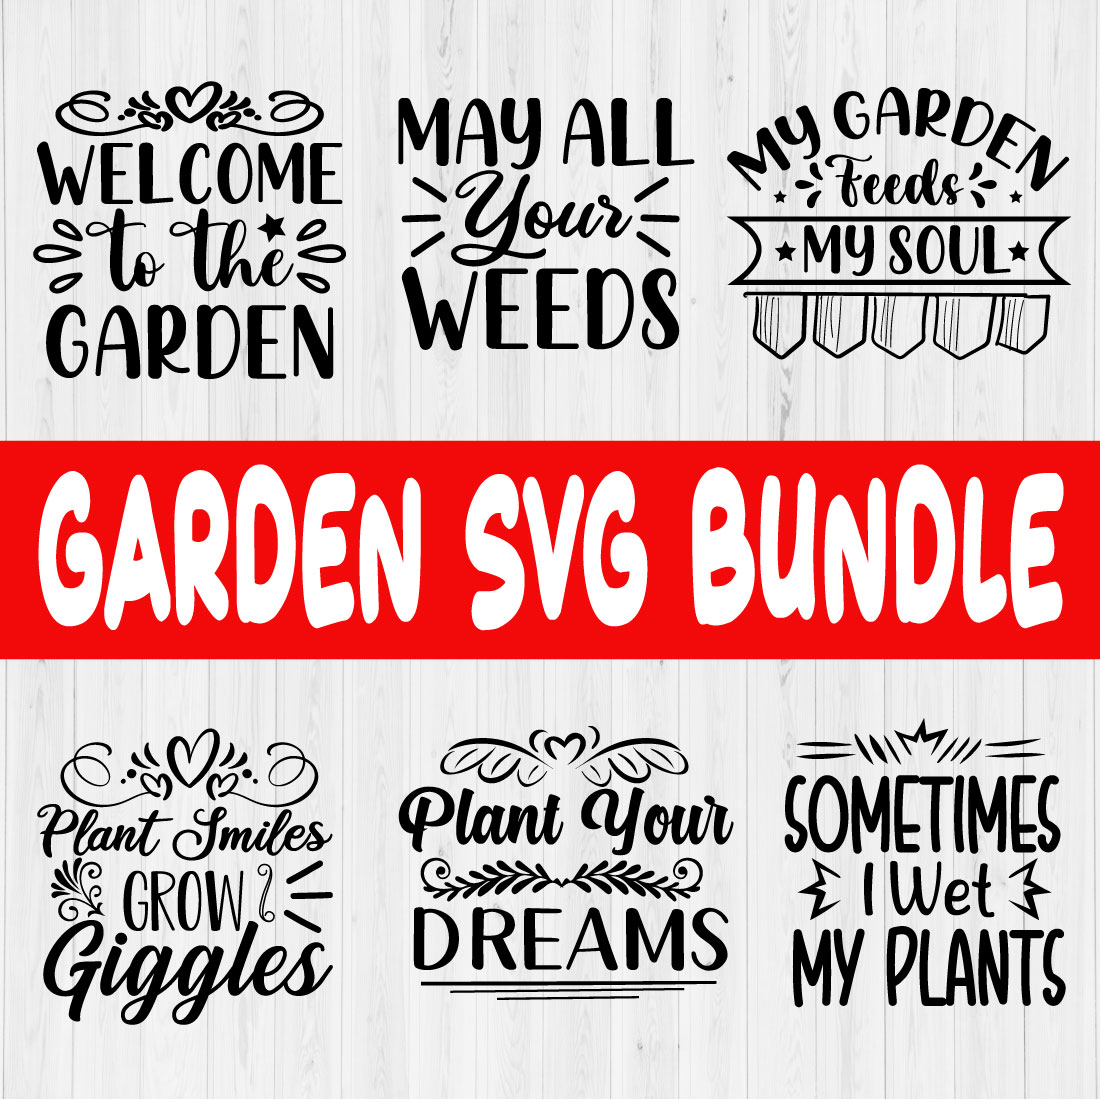 Garden Svg T-shirt Design Bundle Vol4 cover image.